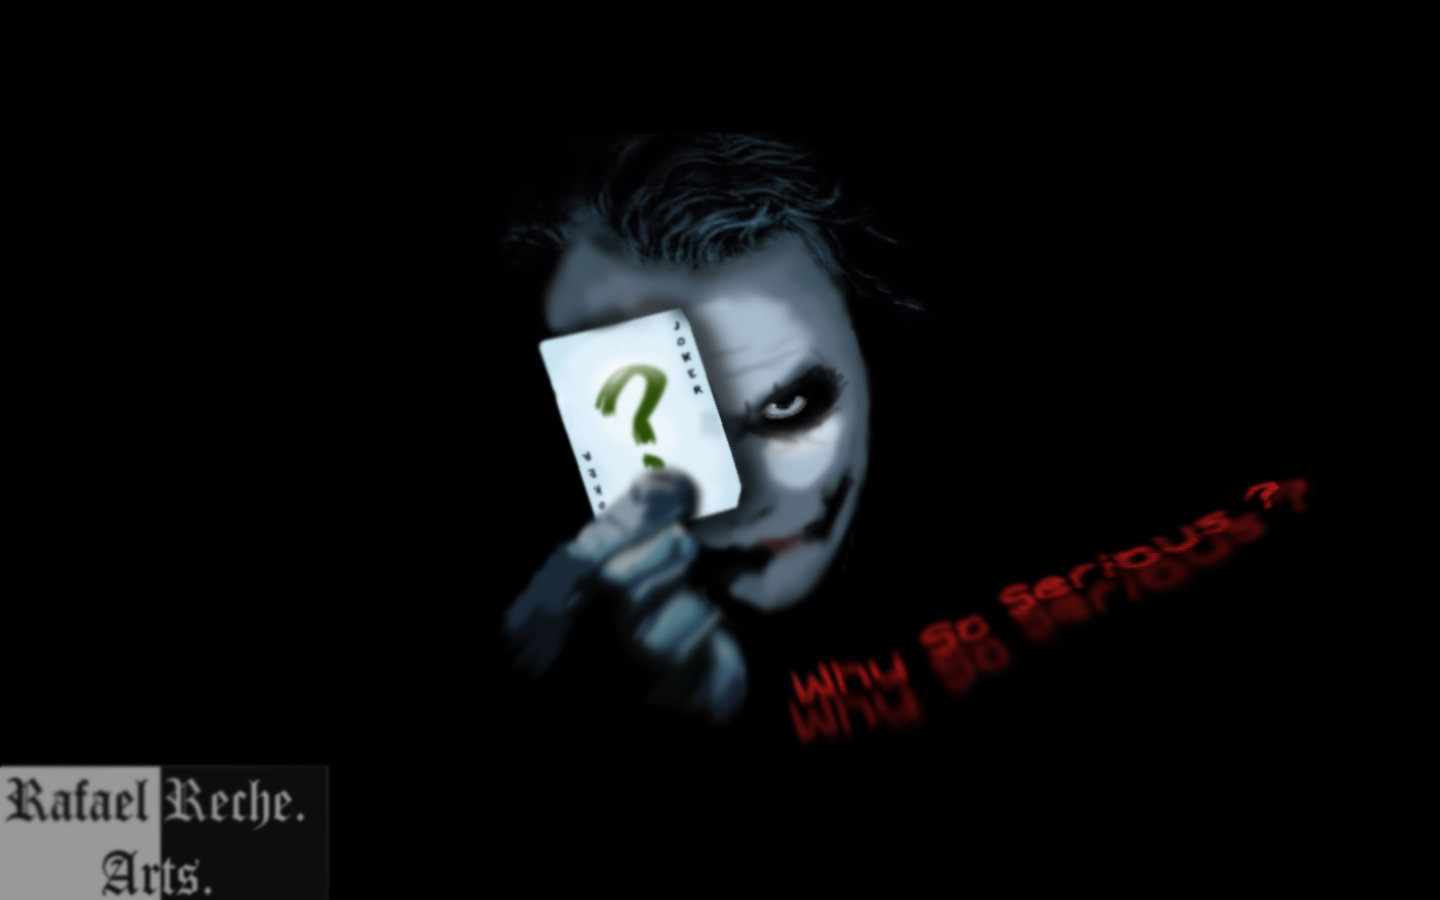 Free Download Joker Why So Serious By Rafael Reche 1440x900